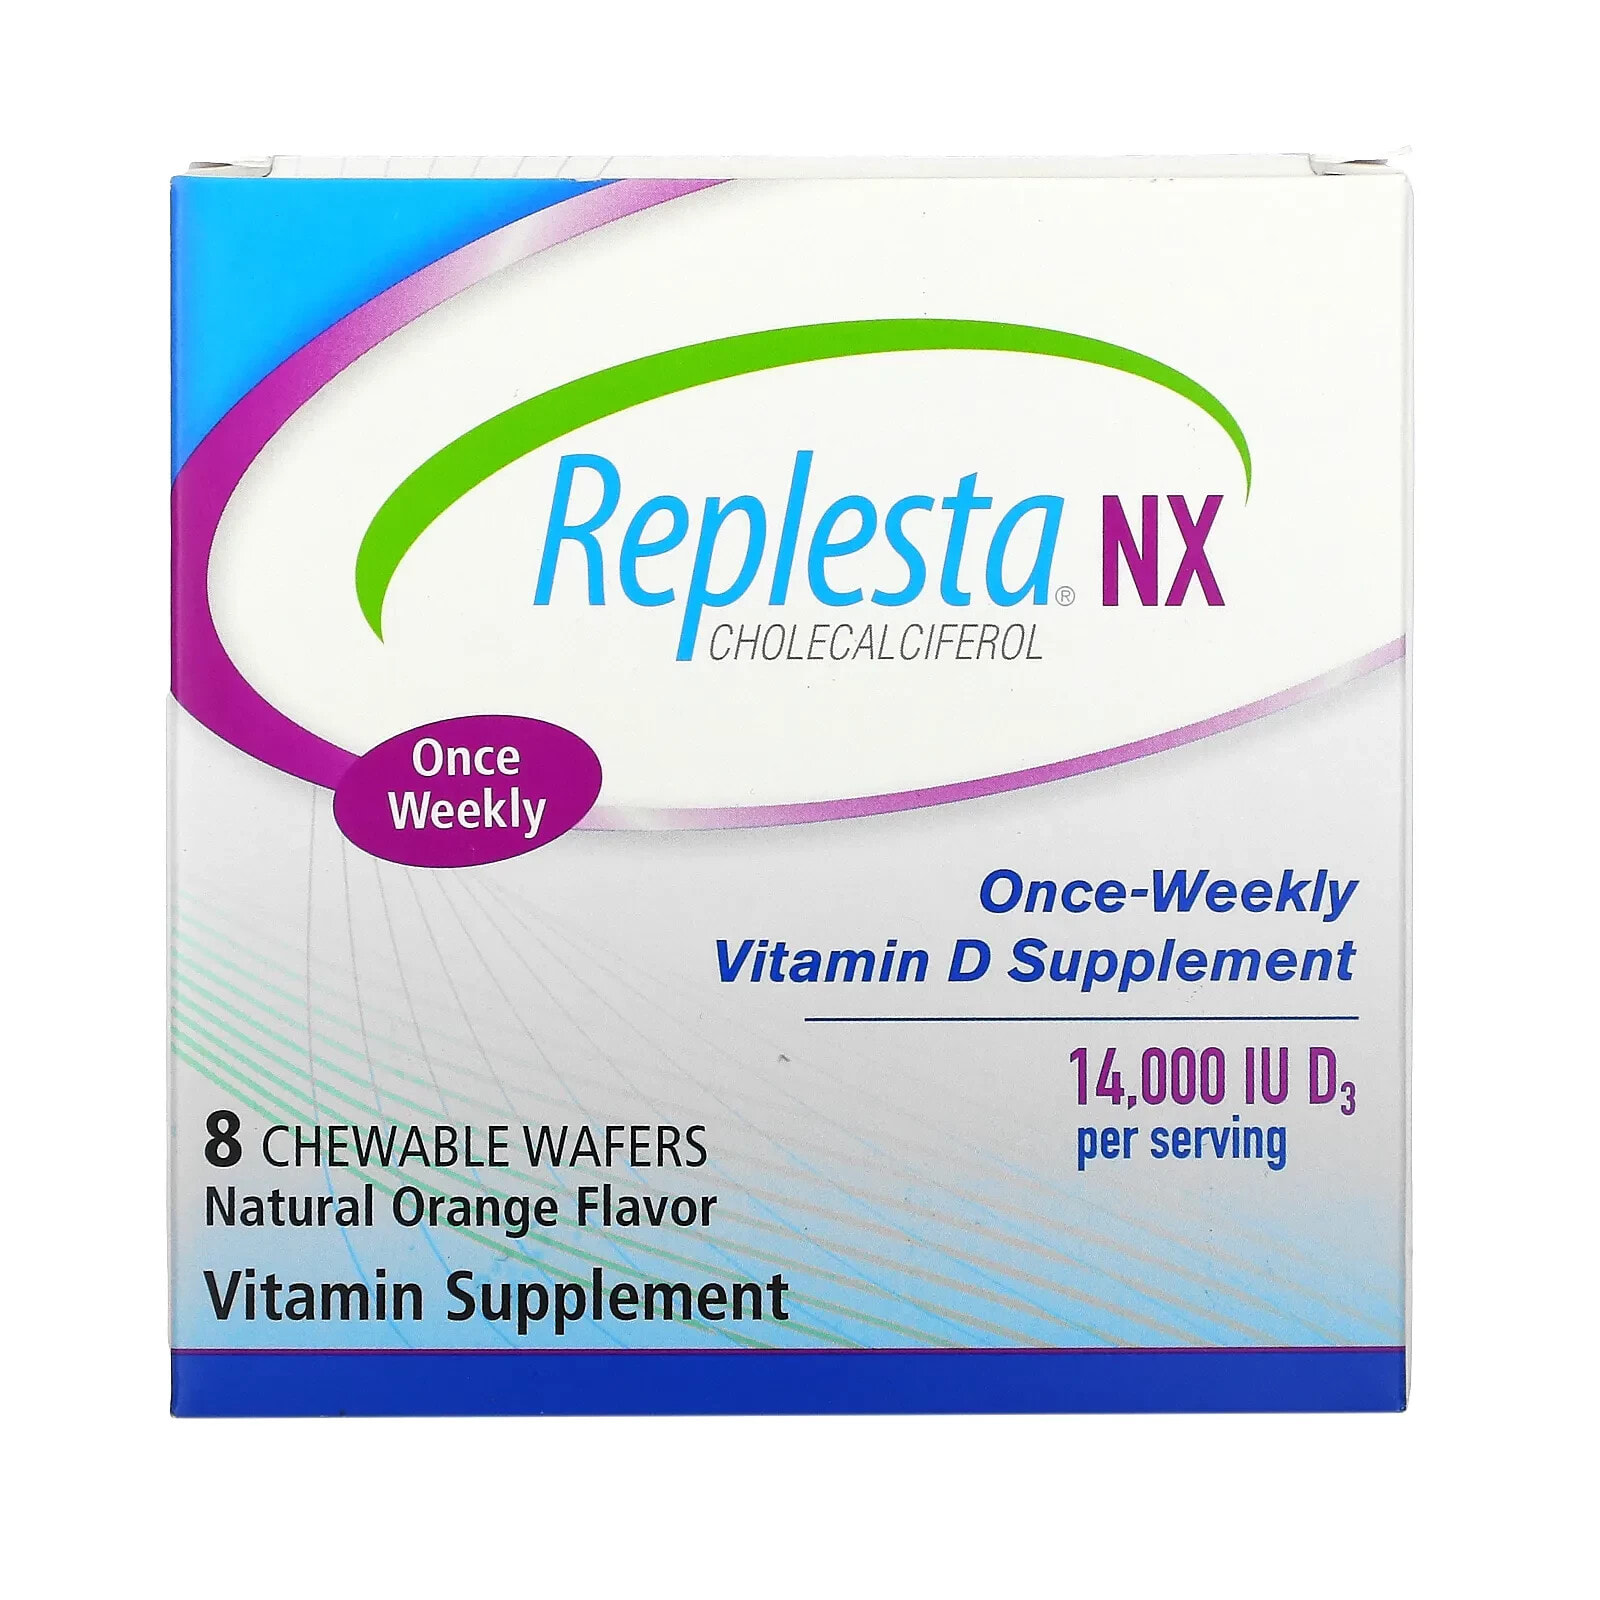 NX Cholecalciferol, Once-Weekly Vitamin D, Natural Orange, 14,000 IU, 8 Chewable Wafers